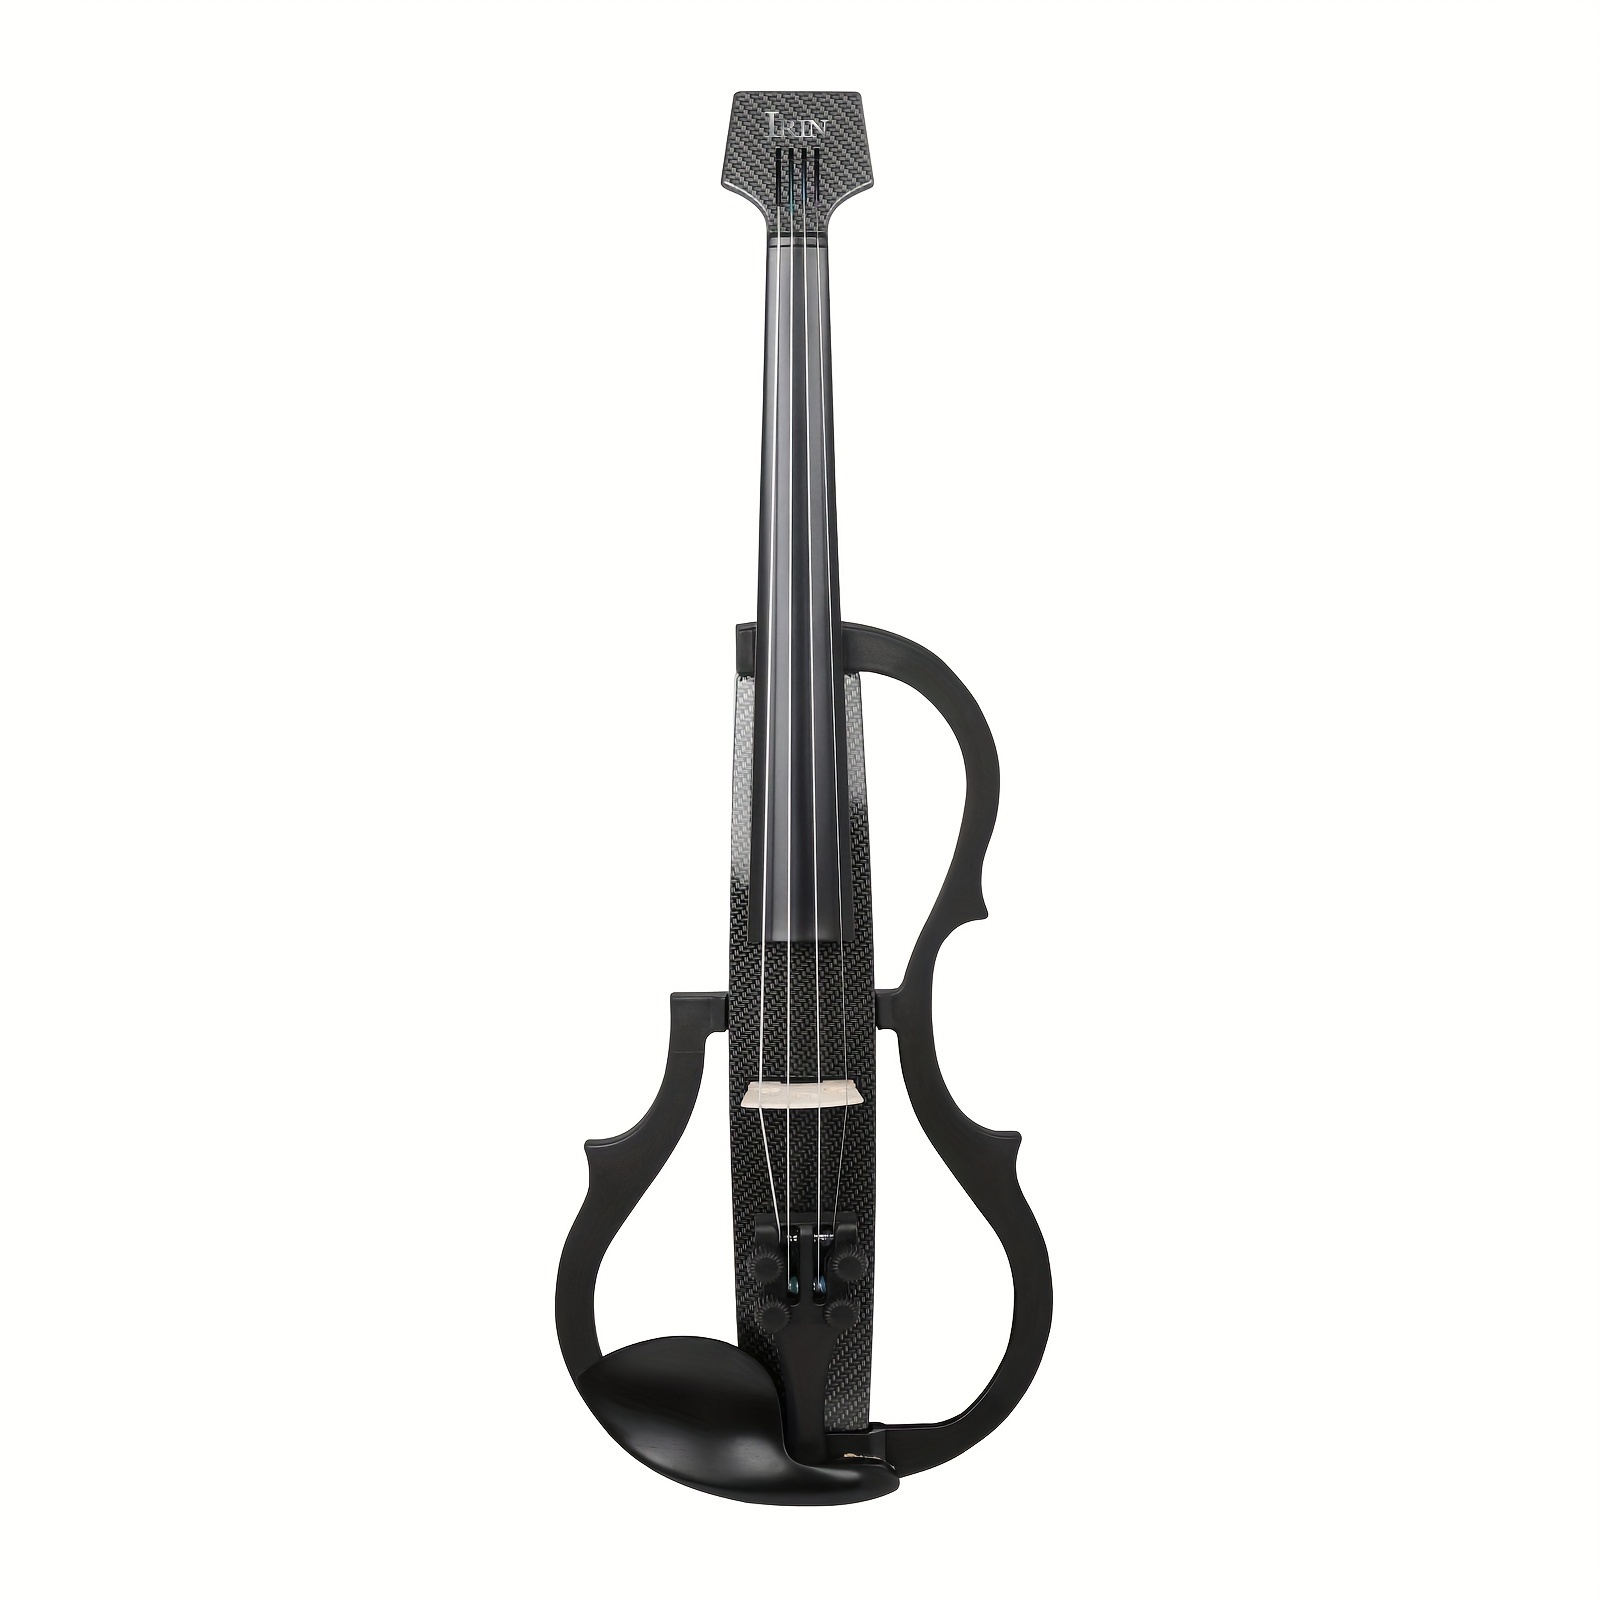 * AU-10 Intelligent 4/4 Silent Electroacoustic Violin Carbon Fiber Body ABS  Edging (With Headphones + Cable + Shoulder Rest)